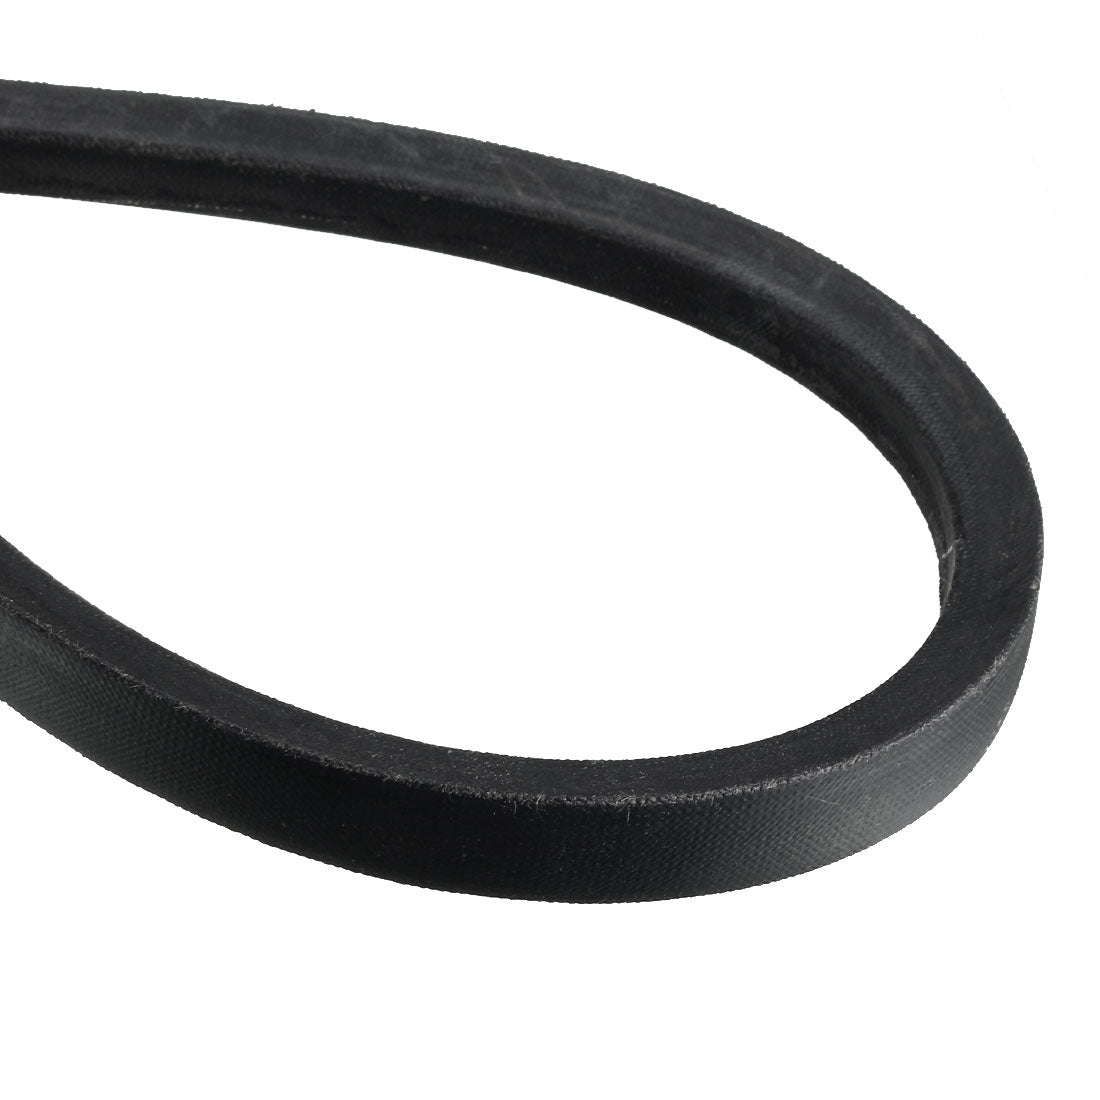 uxcell Uxcell B40 V-Belts 40" Pitch Length, B-Section Rubber Drive Belt 2pcs